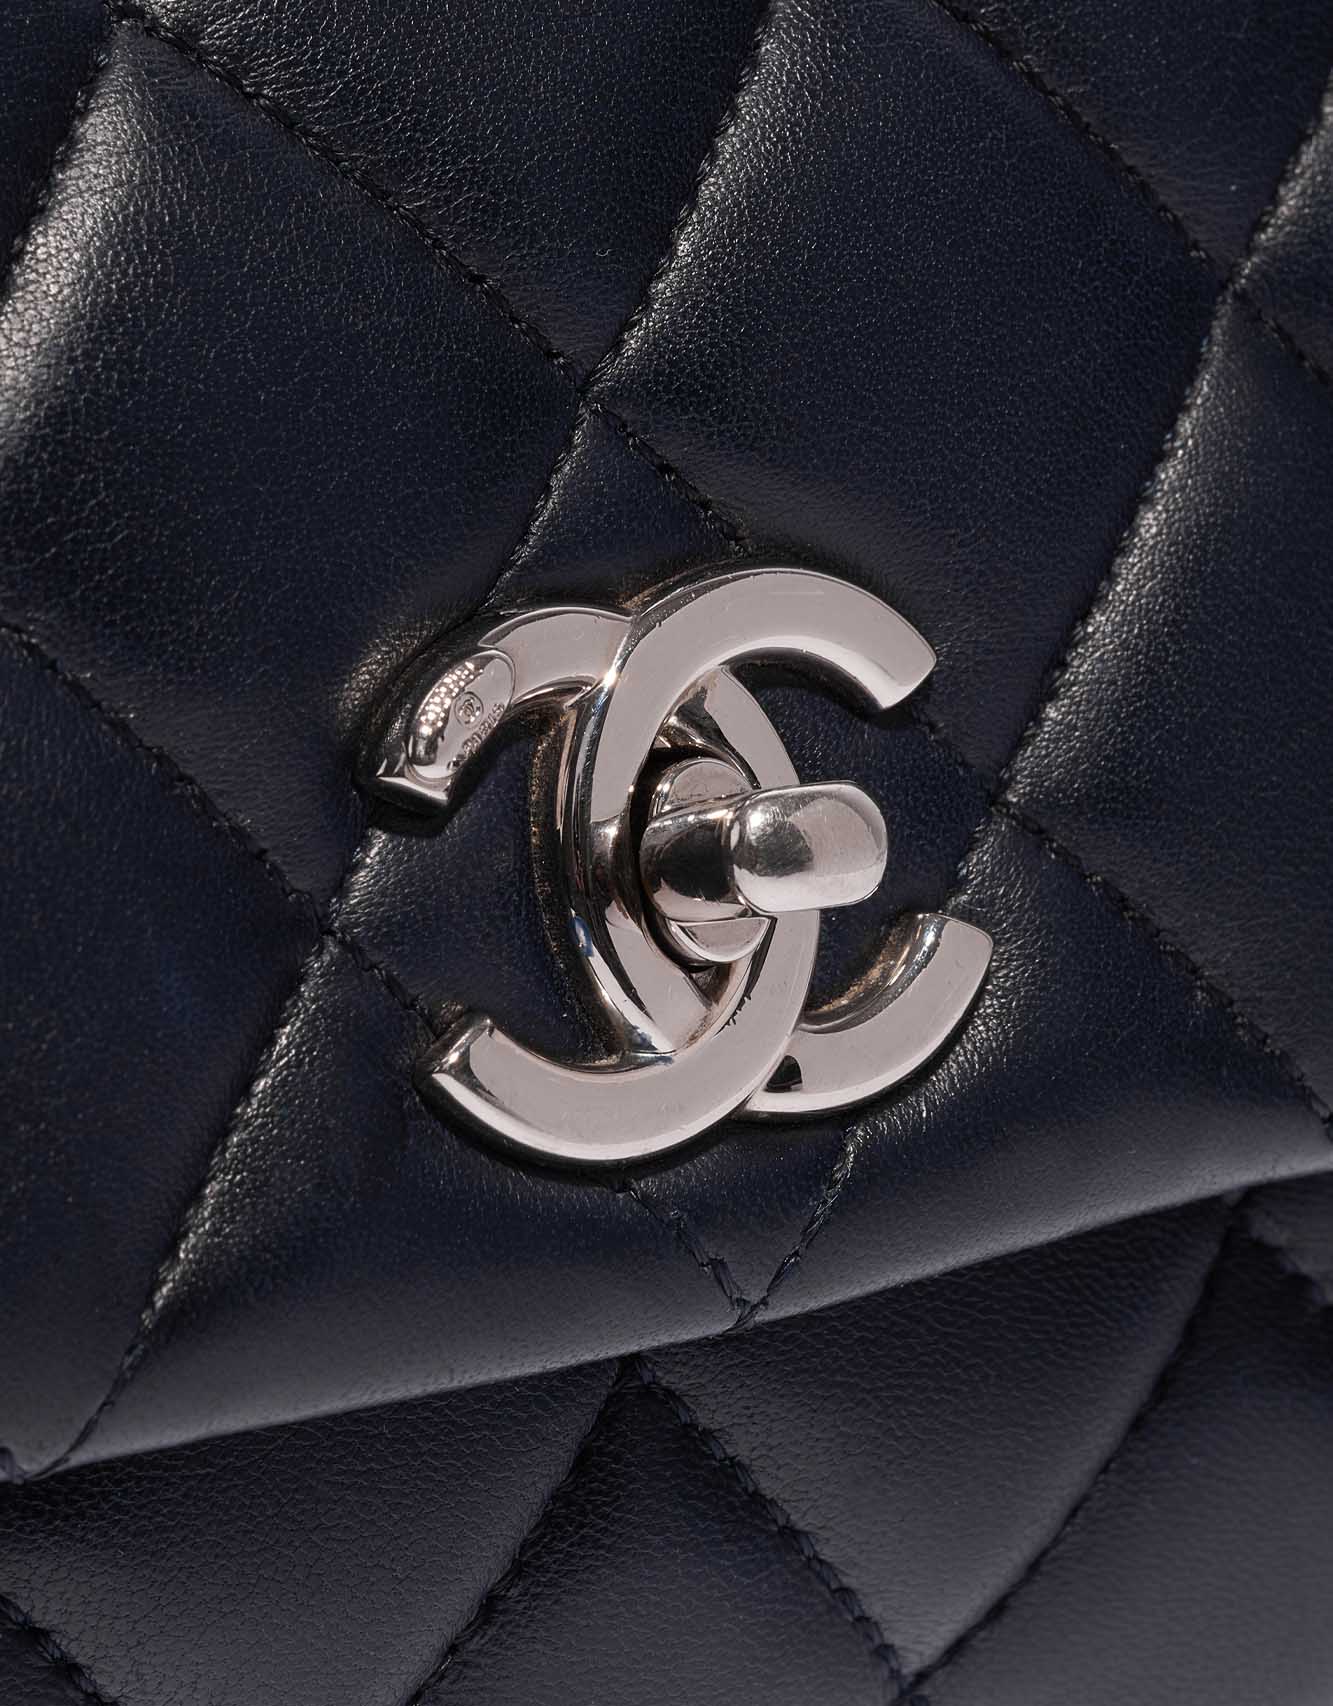 CHANEL, Bags, Chanel Classic Flap Wallet Lambskin Deep Navy